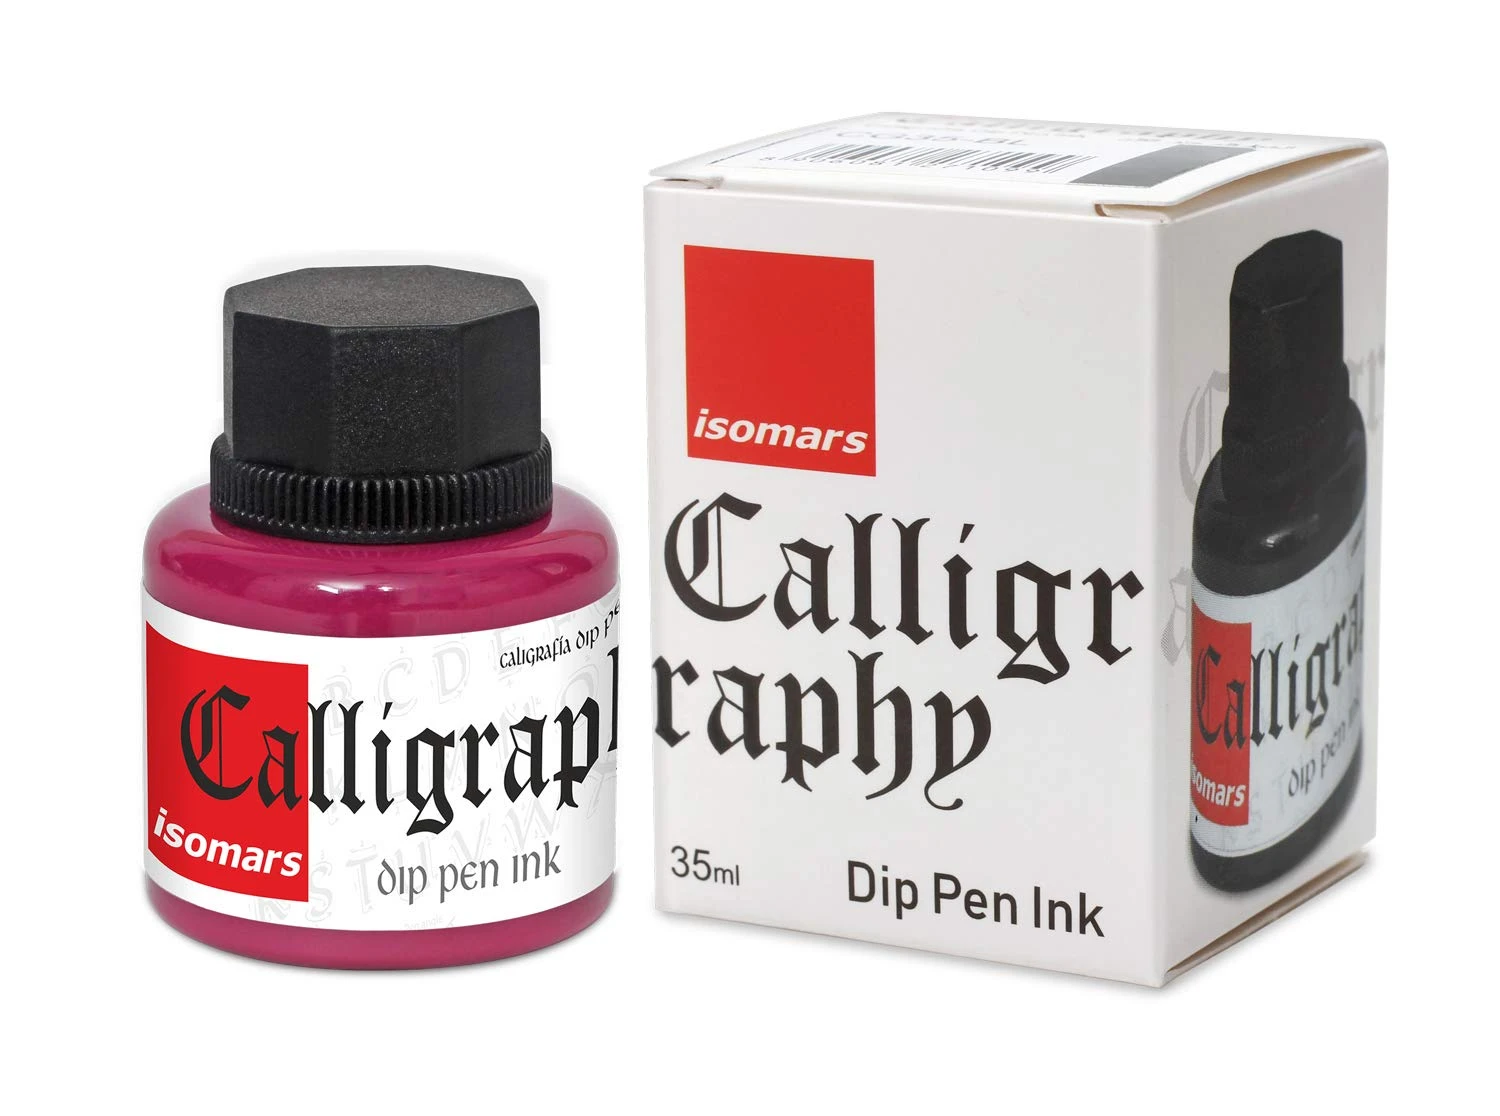 Isomars Calligraphy Dip Pen Ink 35ml - Pink